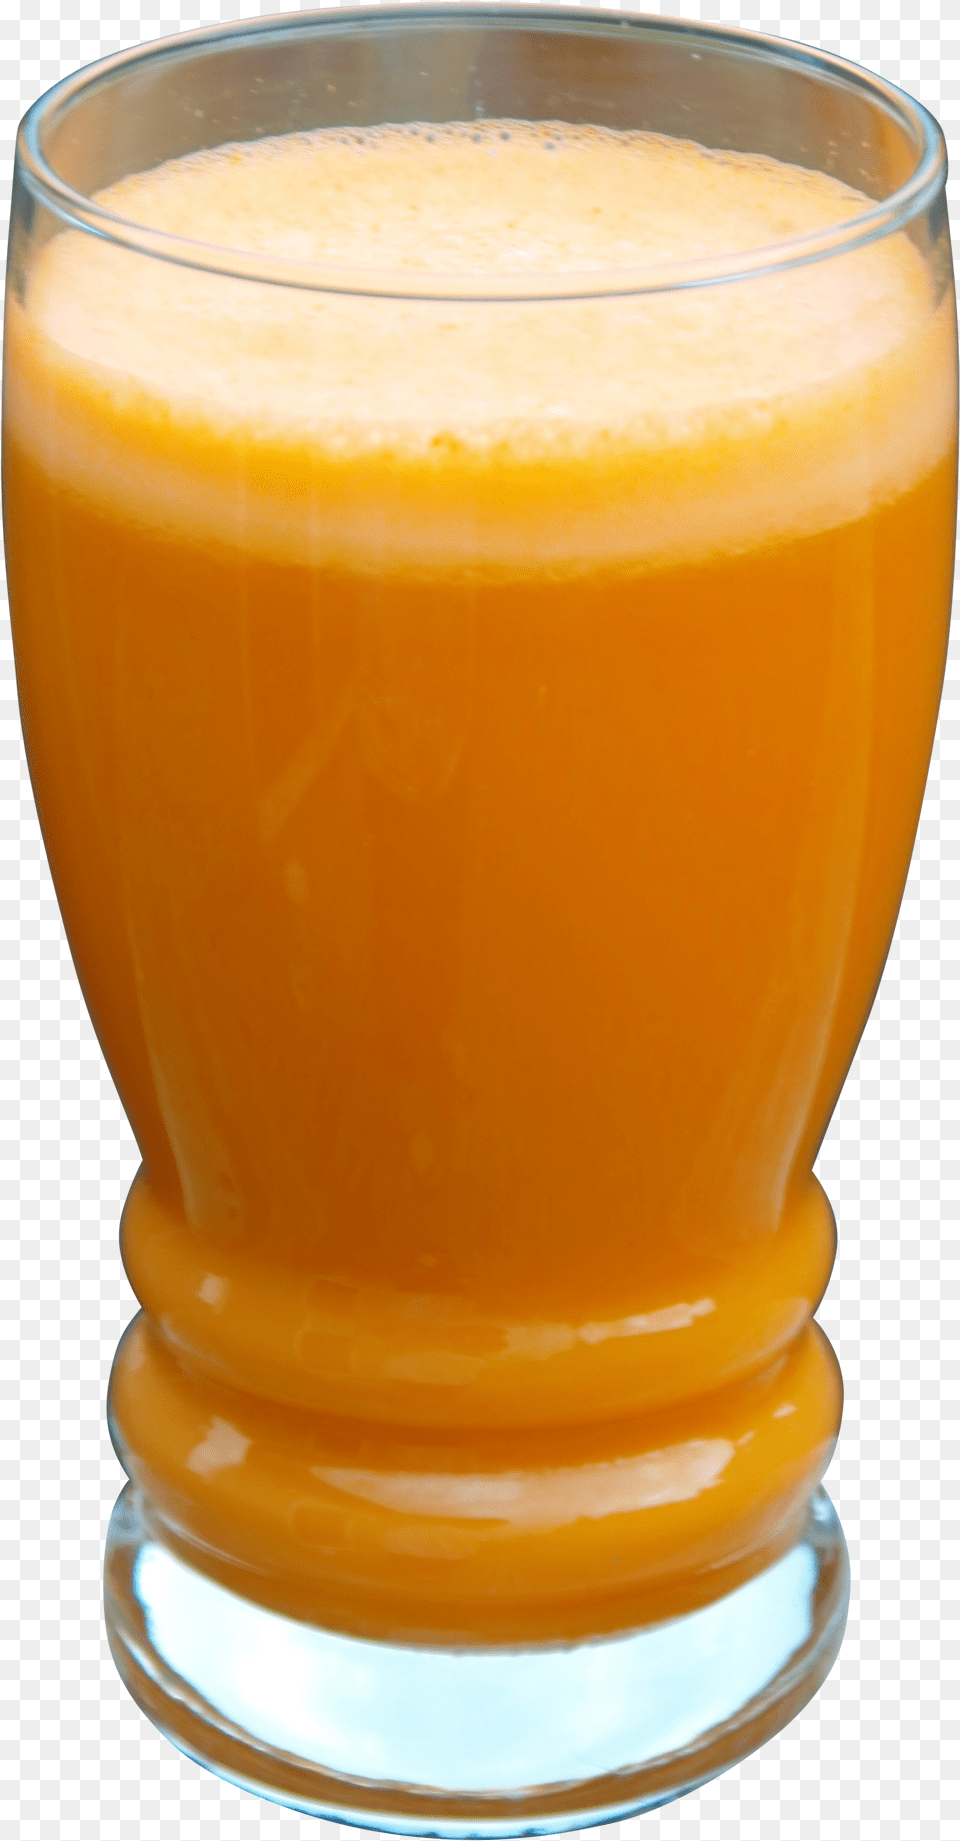 Glass Filled With Orange Carrot Juice Carrot Juice Transparent Background, Beverage, Orange Juice Free Png Download